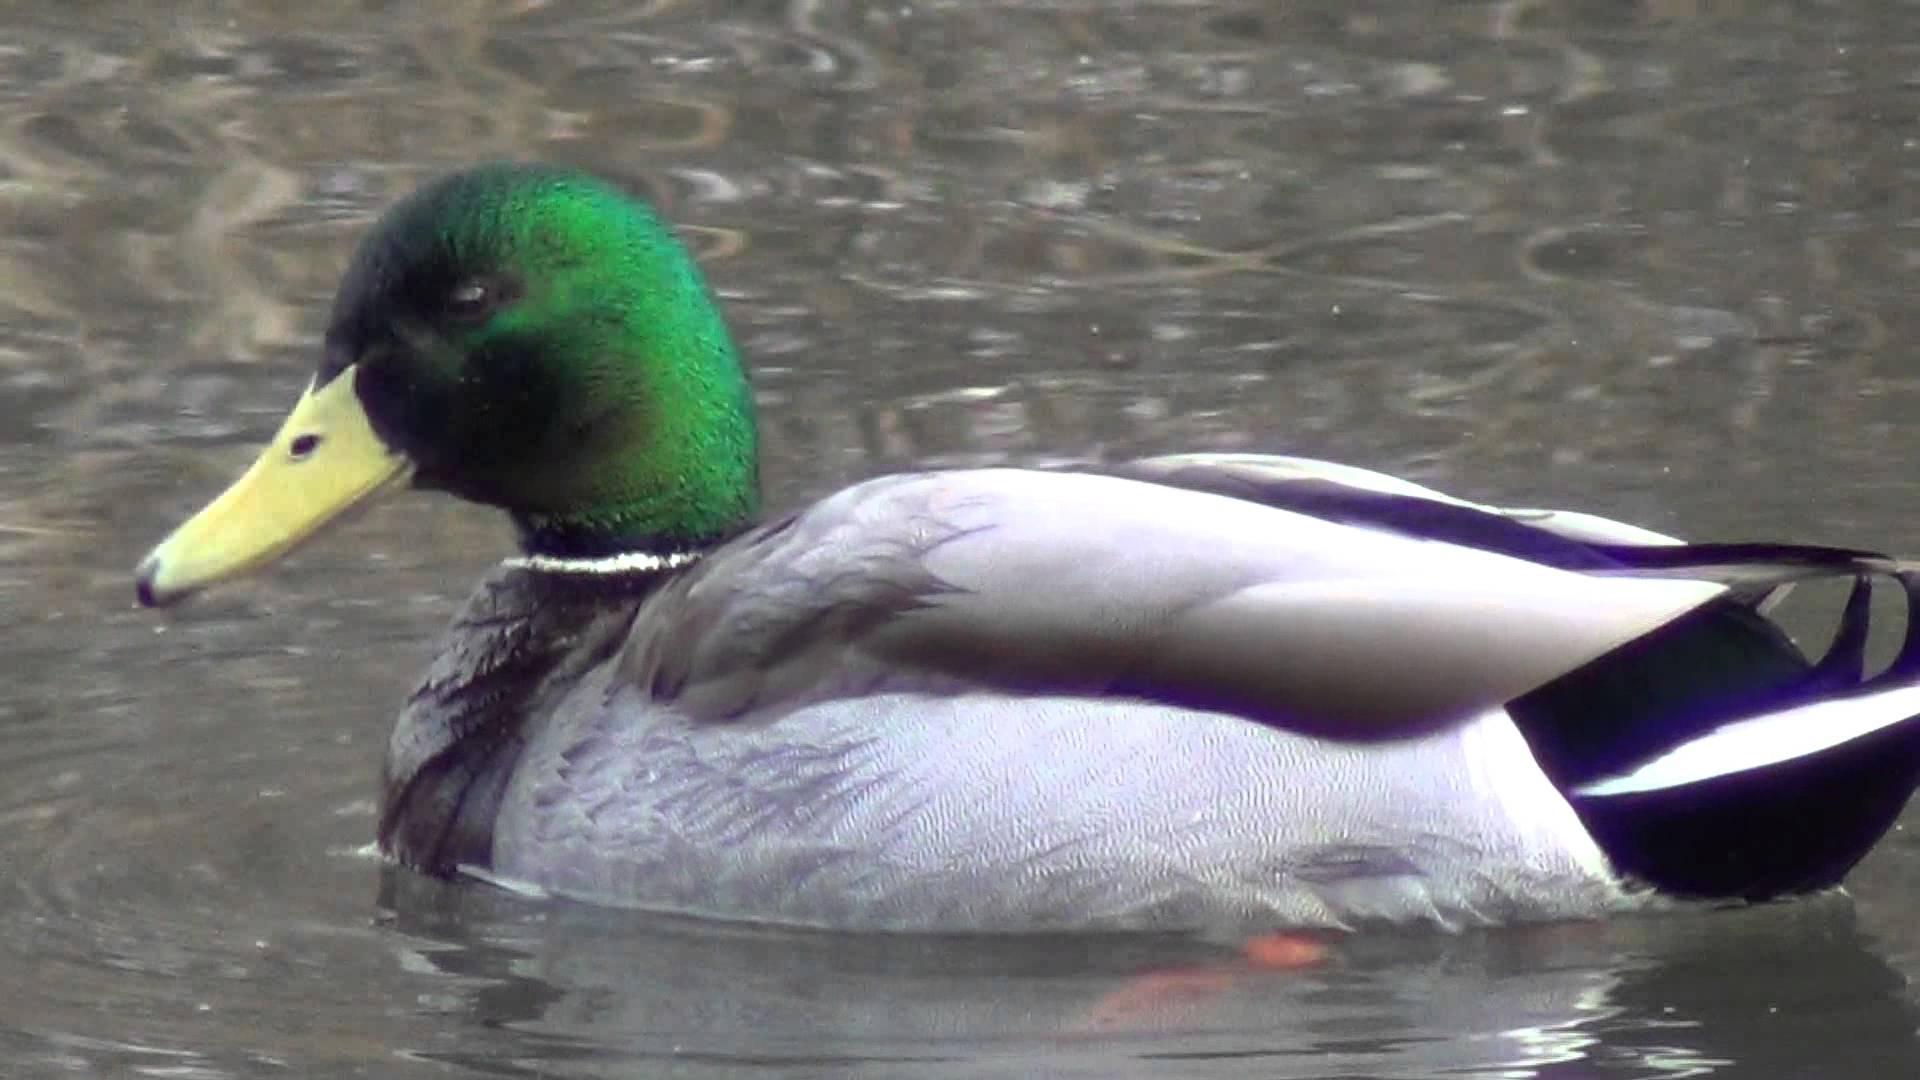 ducks swimming, quacking - YouTube